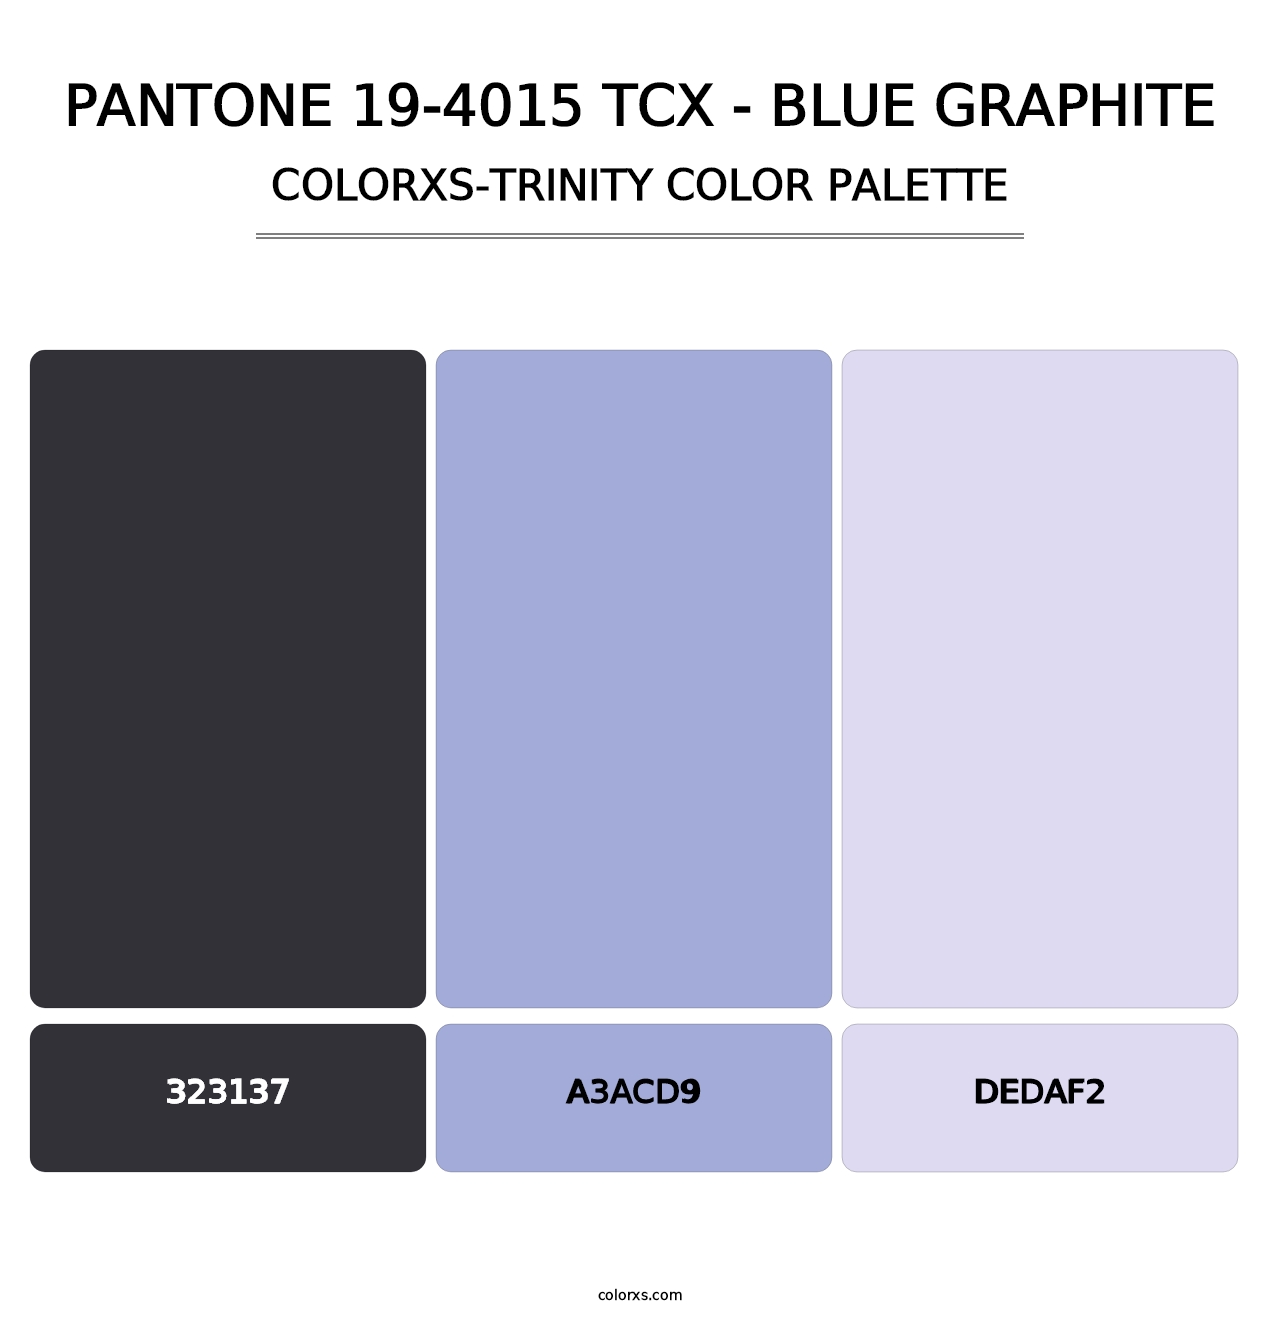 PANTONE 19-4015 TCX - Blue Graphite - Colorxs Trinity Palette